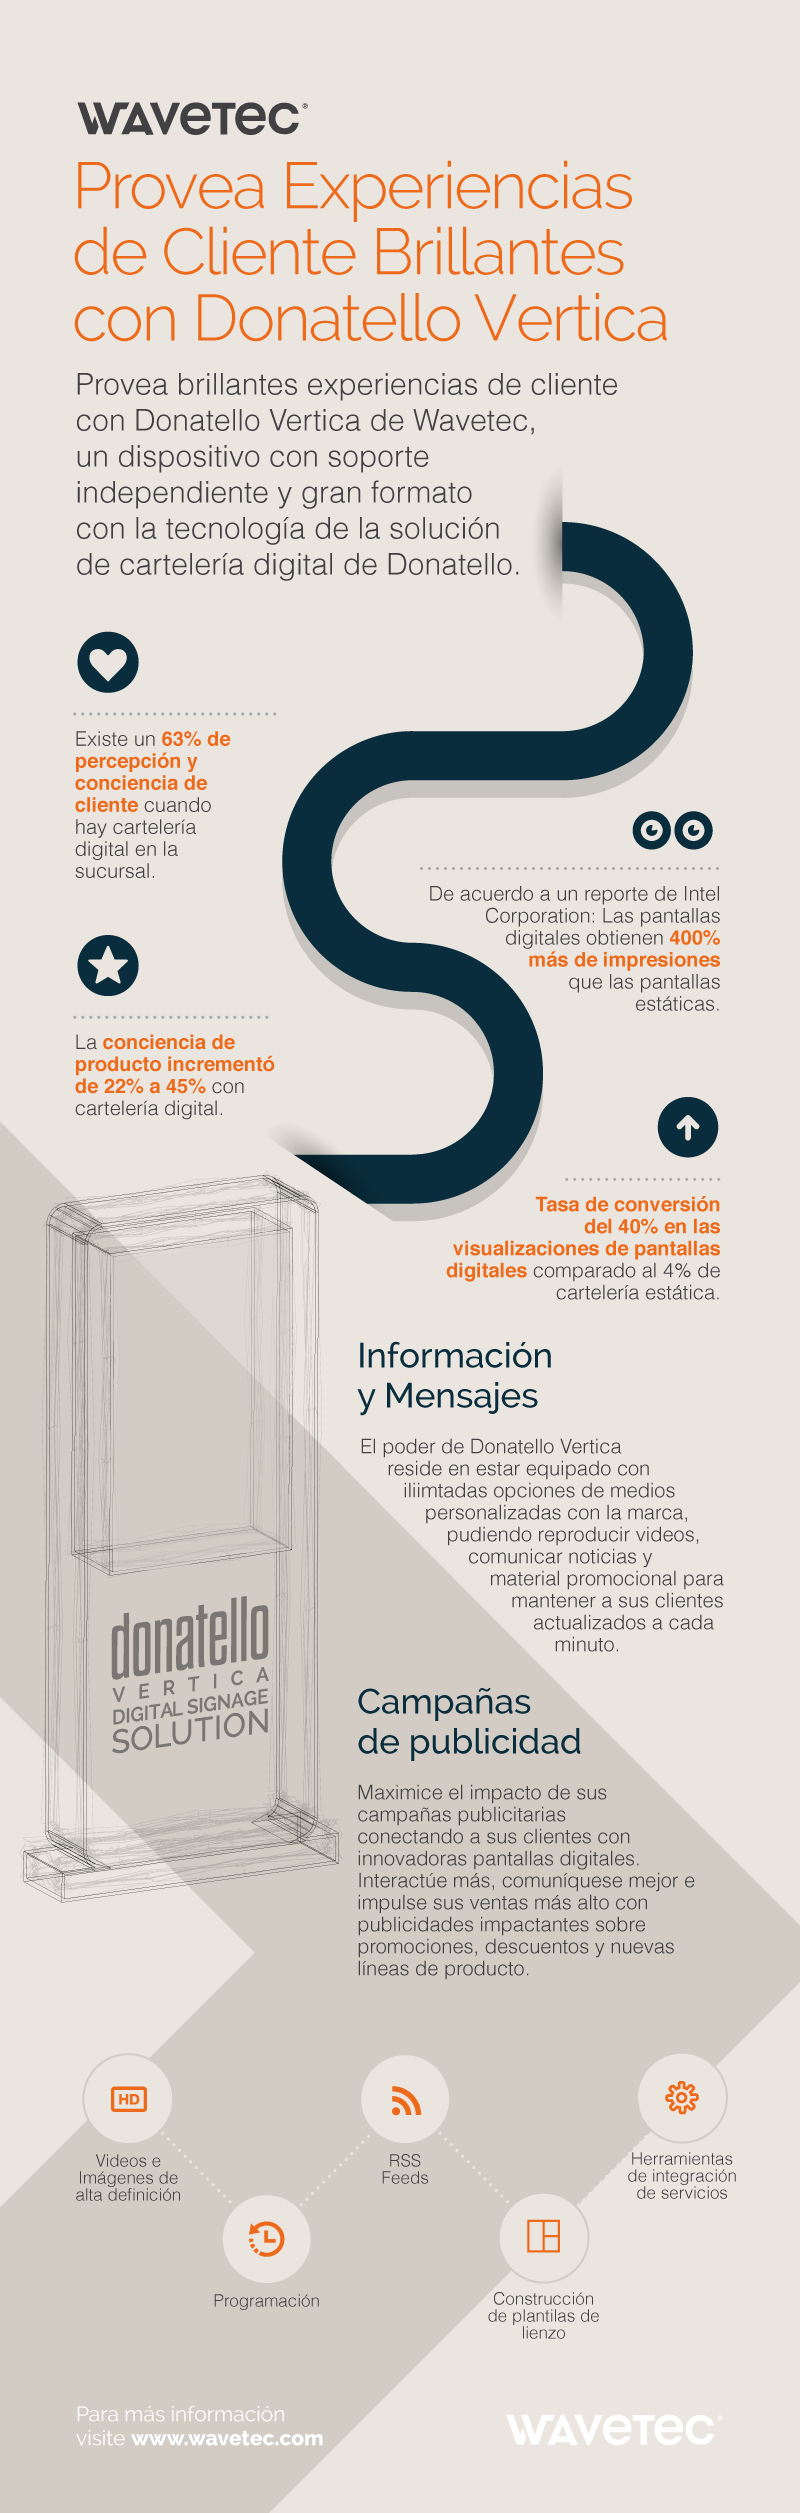 Infographic-Donatello-5-Ways_es.png